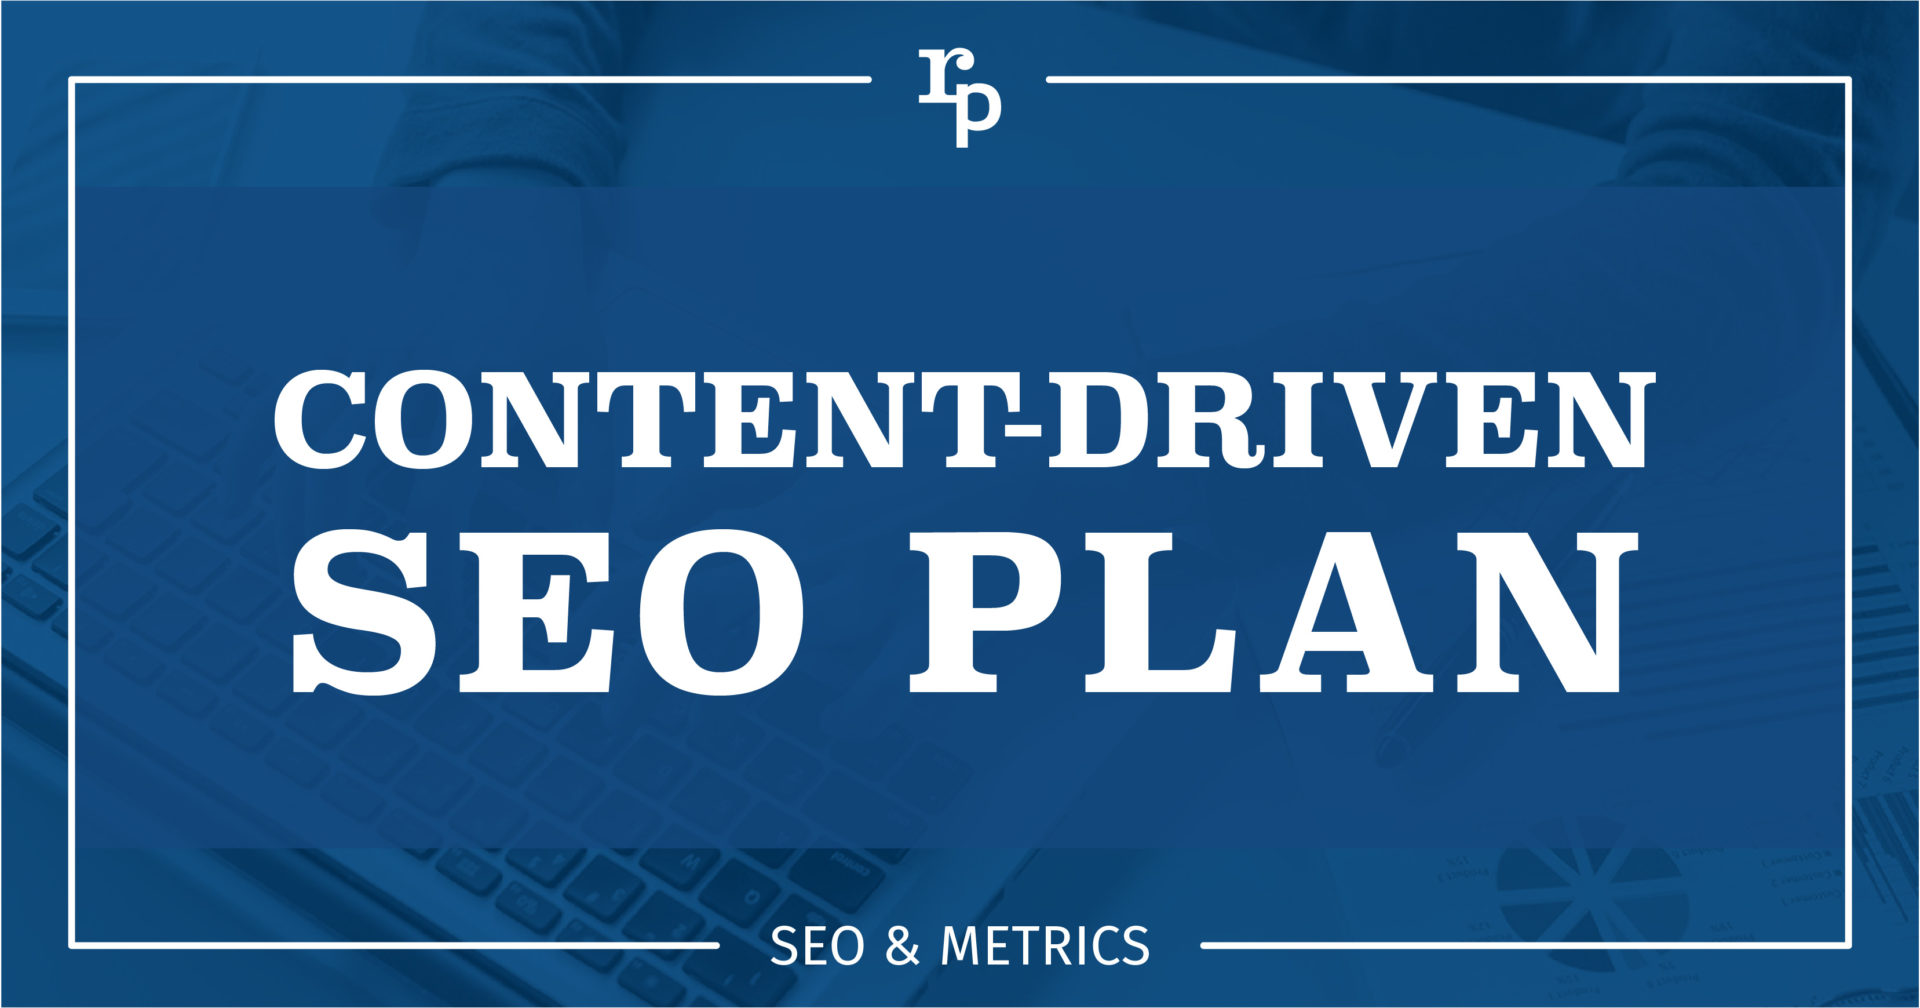 content driven seo plan seo and metrics landscape blue